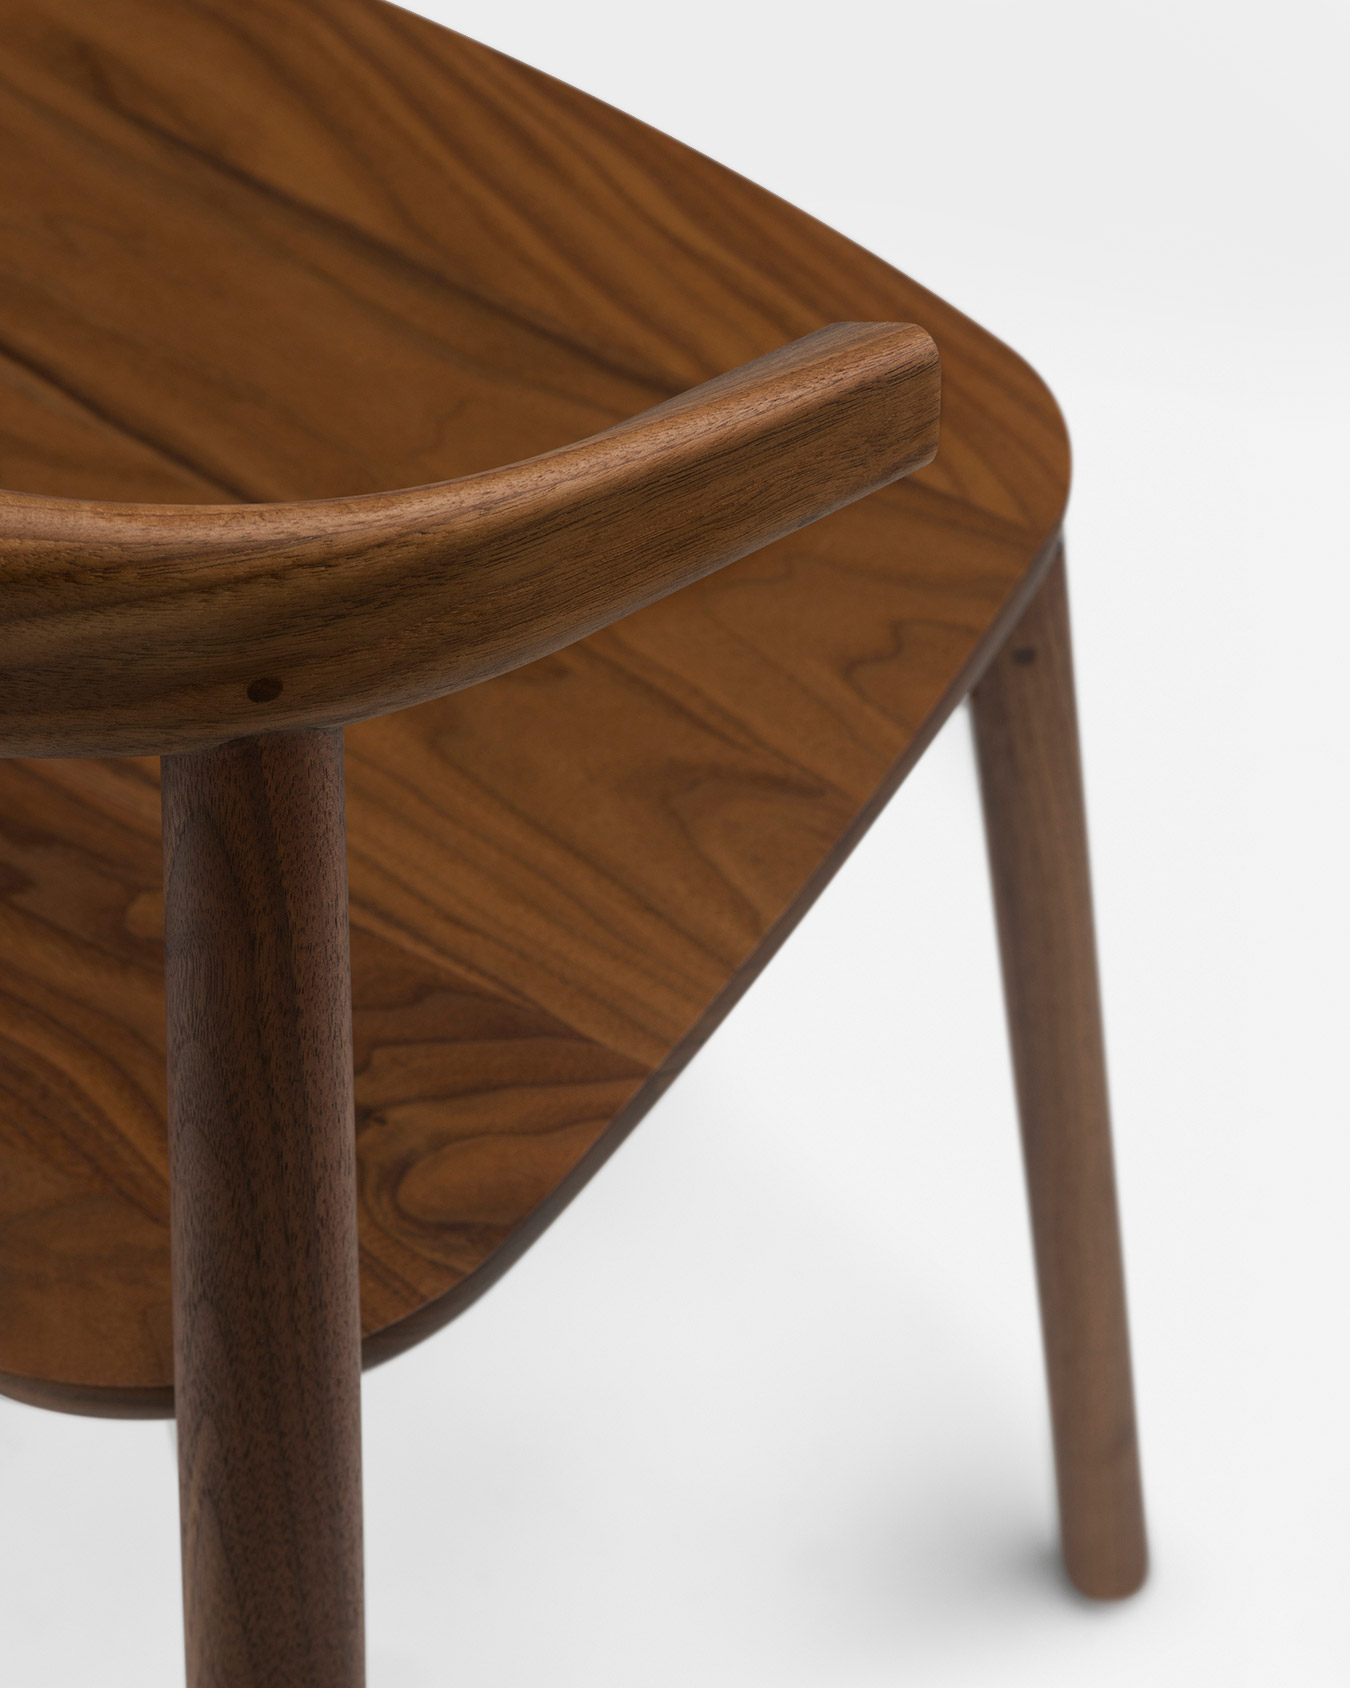 Minimalist Chair Design: Ando Chair by Matthew Hilton for De La Espada via Aesence